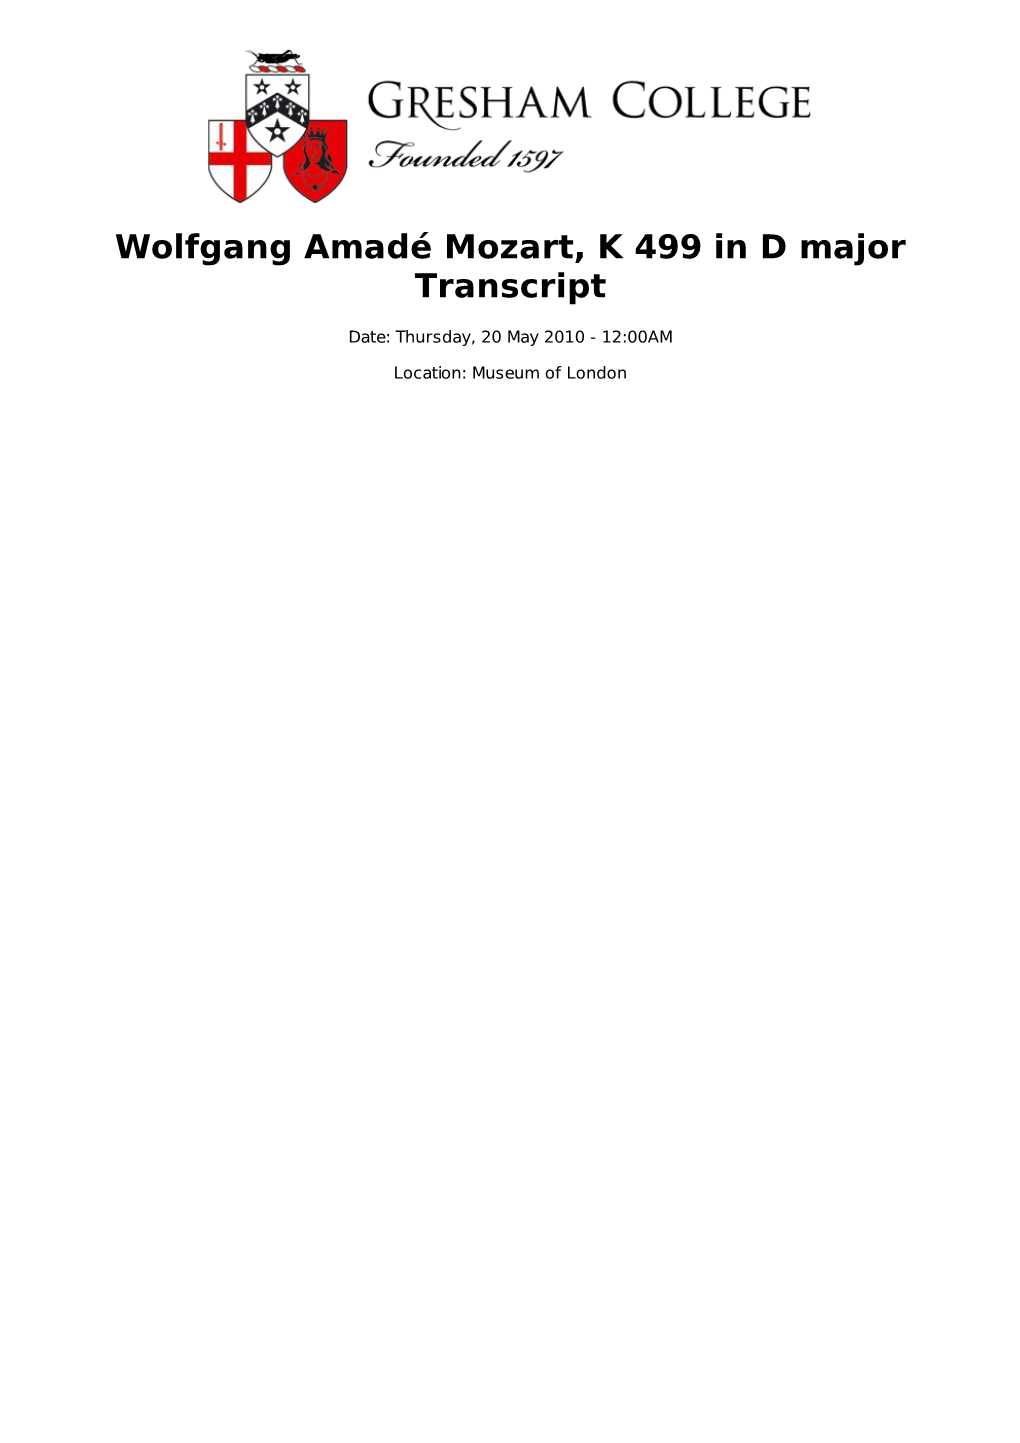 Wolfgang Amadé Mozart, K 499 in D Major Transcript